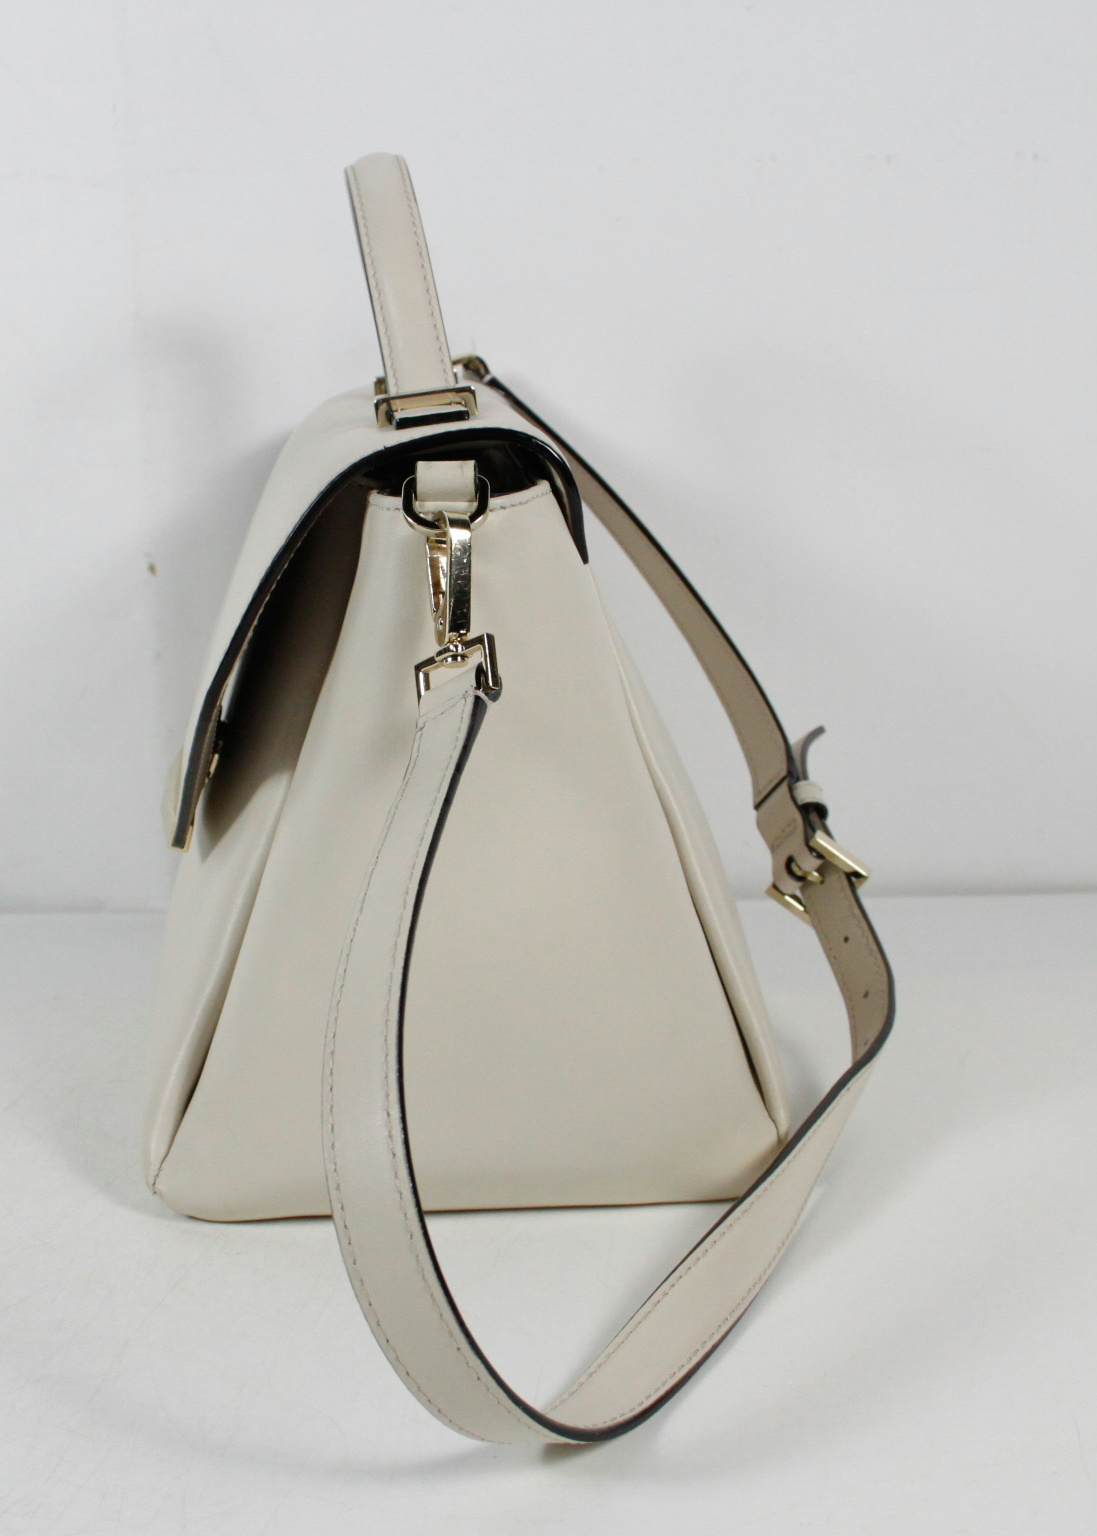 Kate Spade New York Ivory Gold Button Bucket Shoulder Bag Purse | eBay